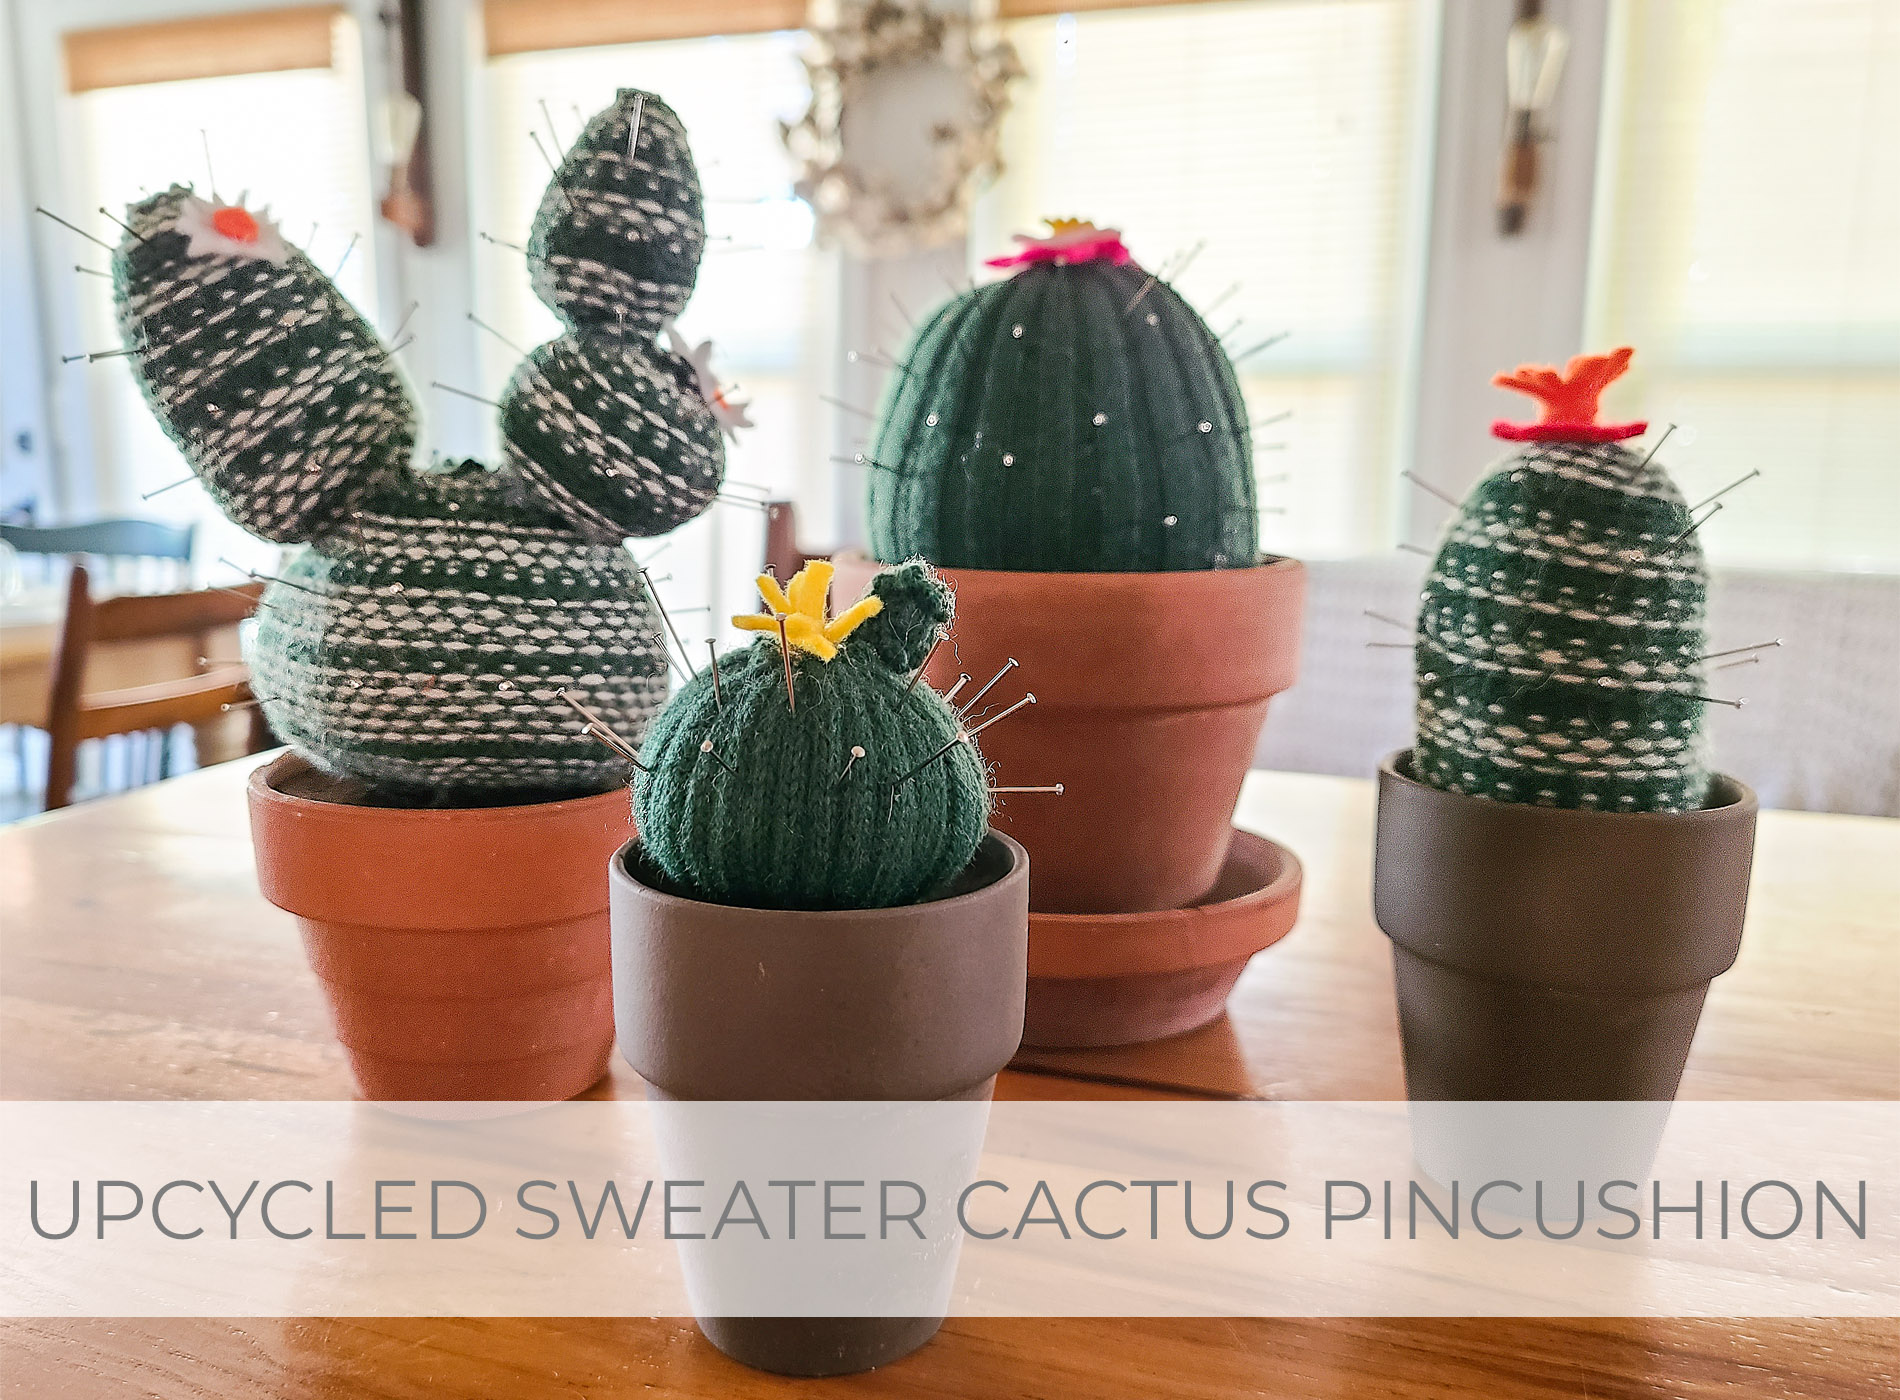 Upcycled Sweater Cactus Pincushion Tutorial by Larissa of Prodigal Pieces | prodigalpieces.com #prodigalpieces